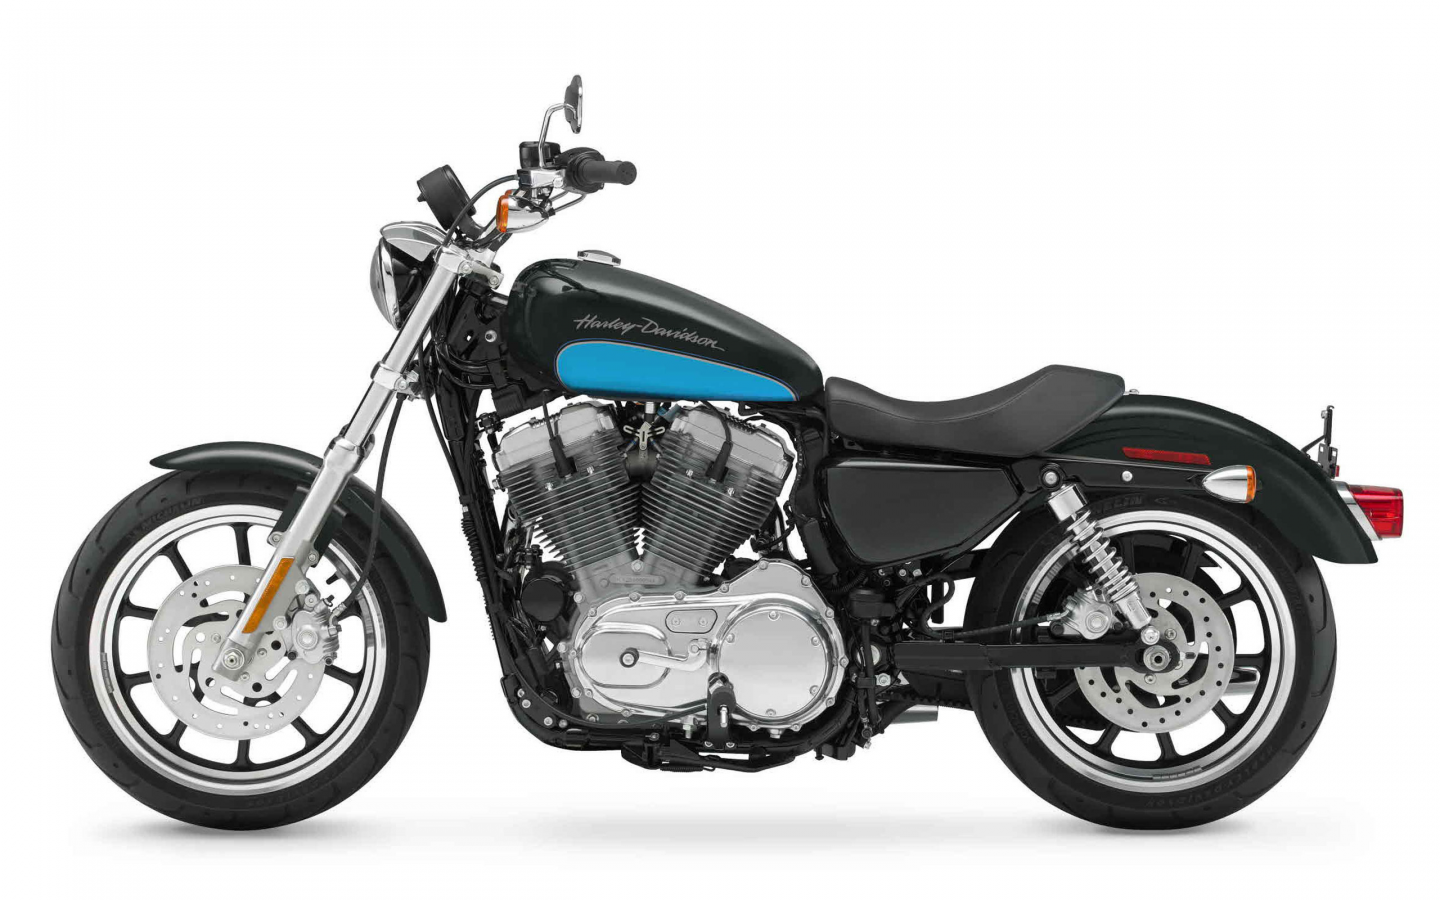 XL 883L Sportster 883 SuperLow, мото, Sportster, moto, мотоциклы, Harley-Davidson, motorcycle, XL 883L Sportster 883 SuperLow 2012, motorbike